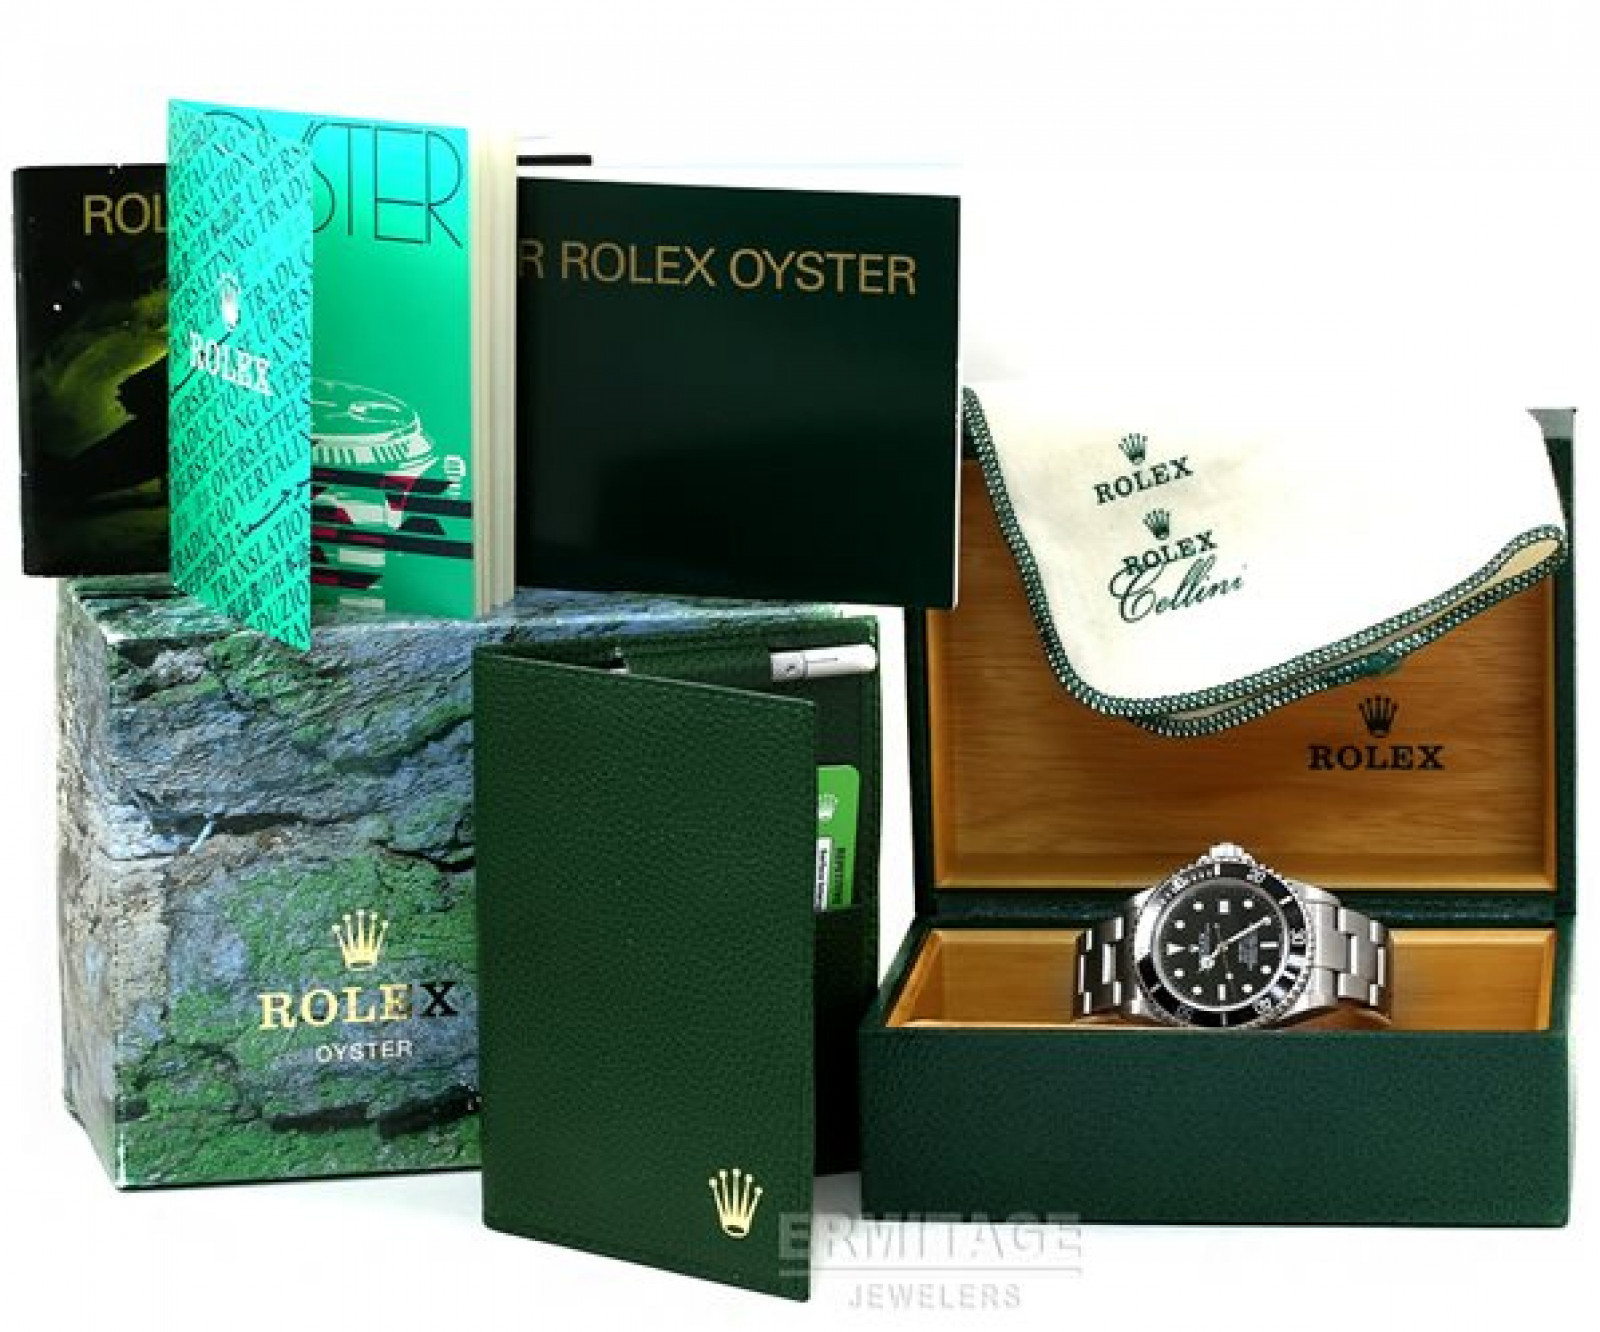 Pre-Owned Rolex Sea-Dweller 16600